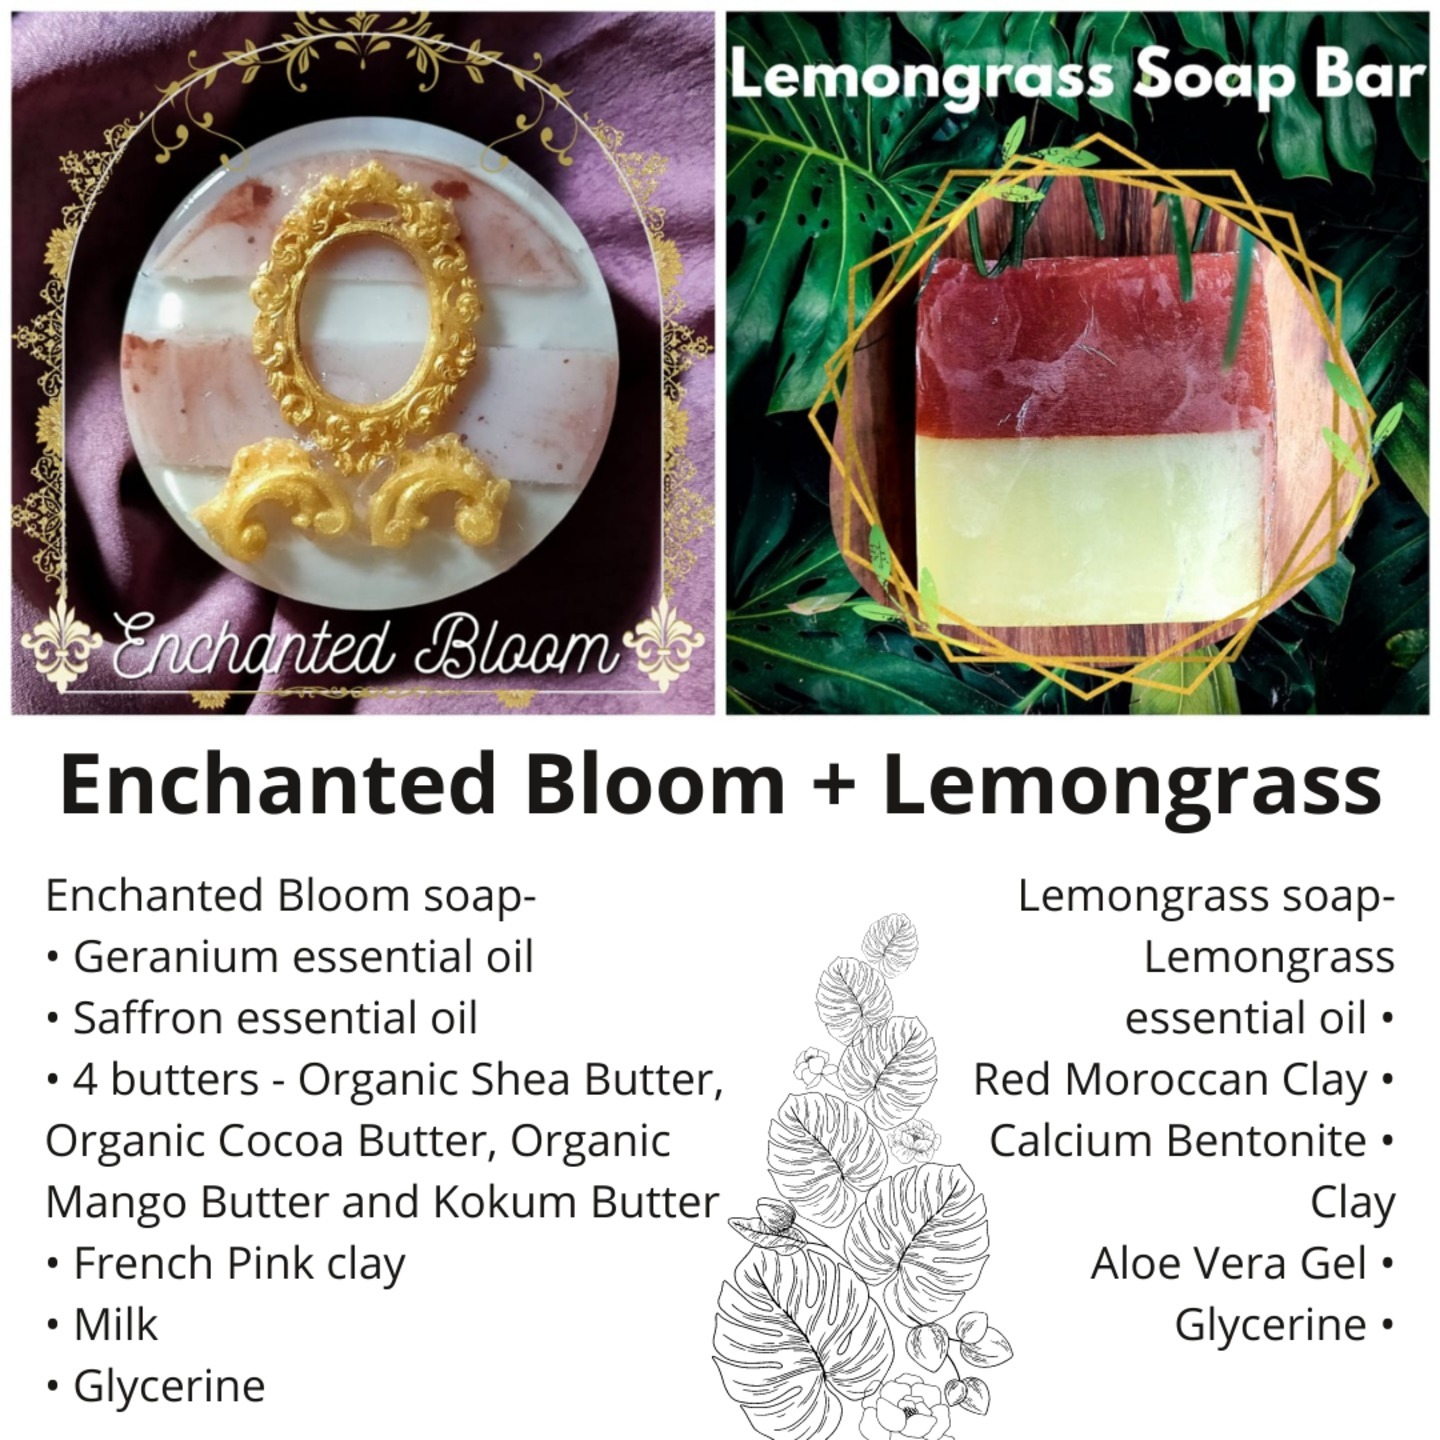 Enchanted Bloom Soap and Lemongrass Soap Bars